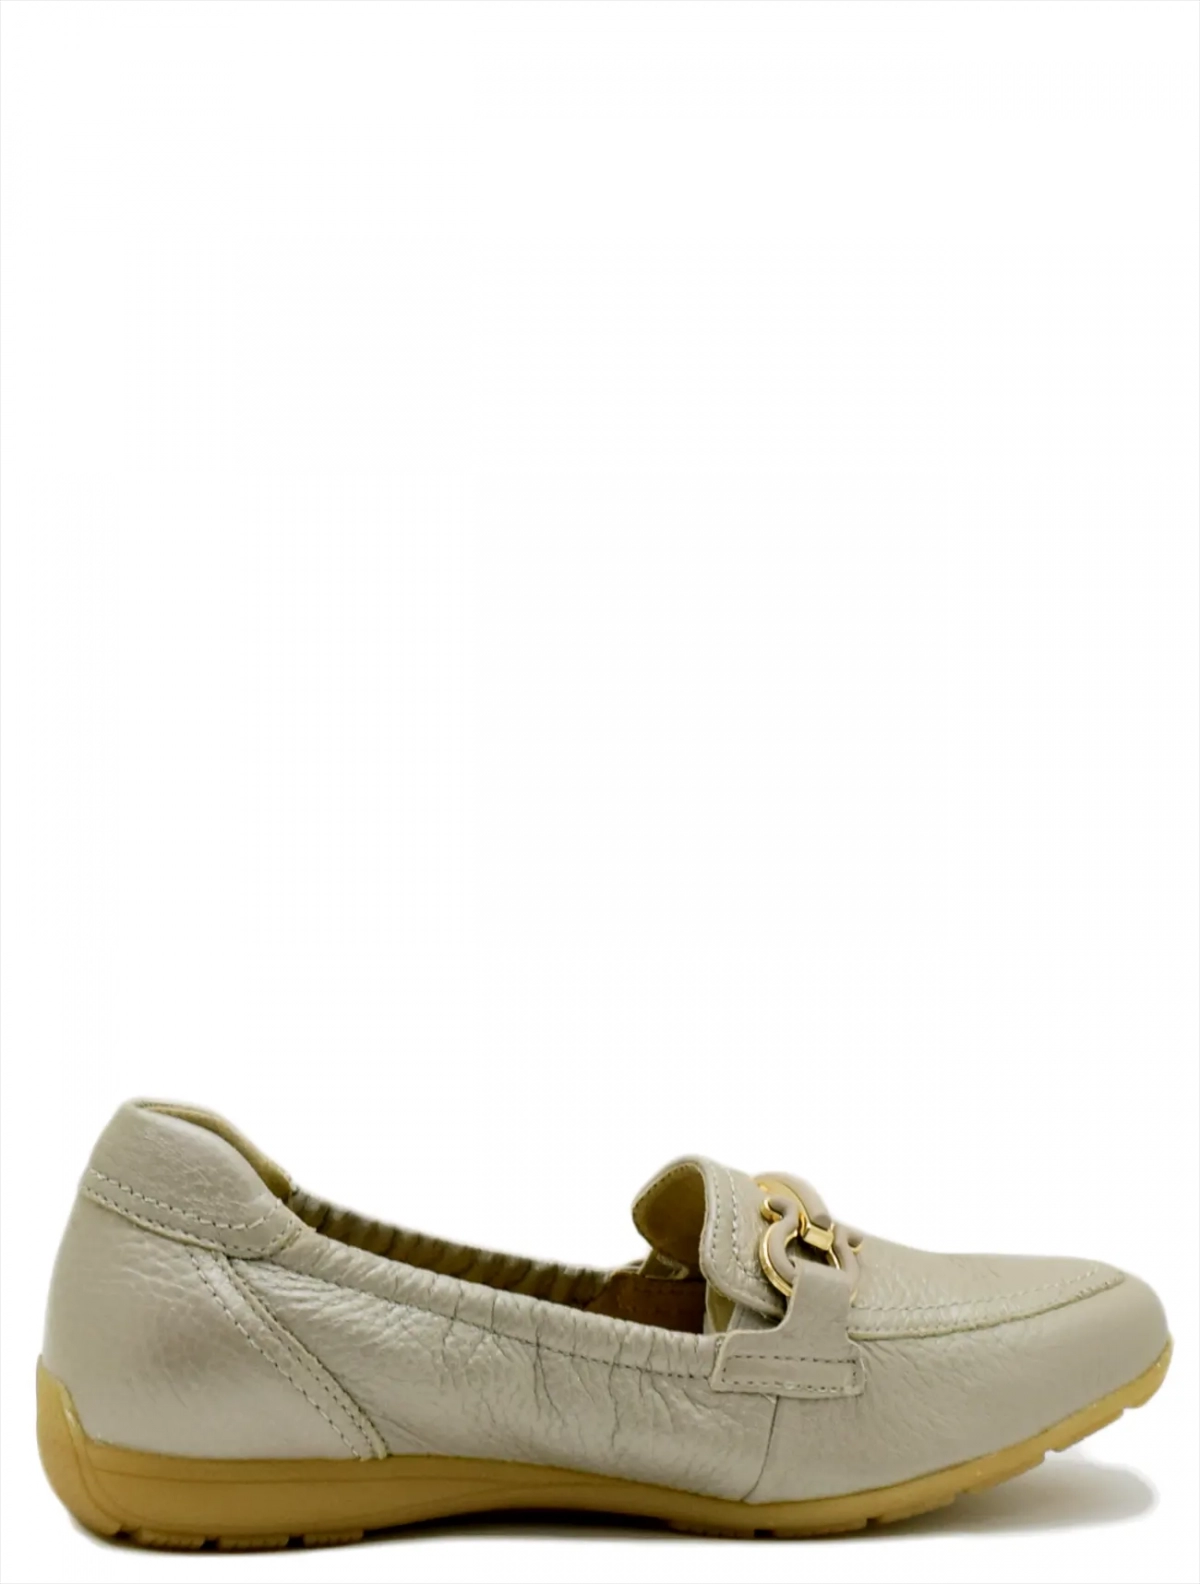 Caprice 9-24654-20-207 женские туфли